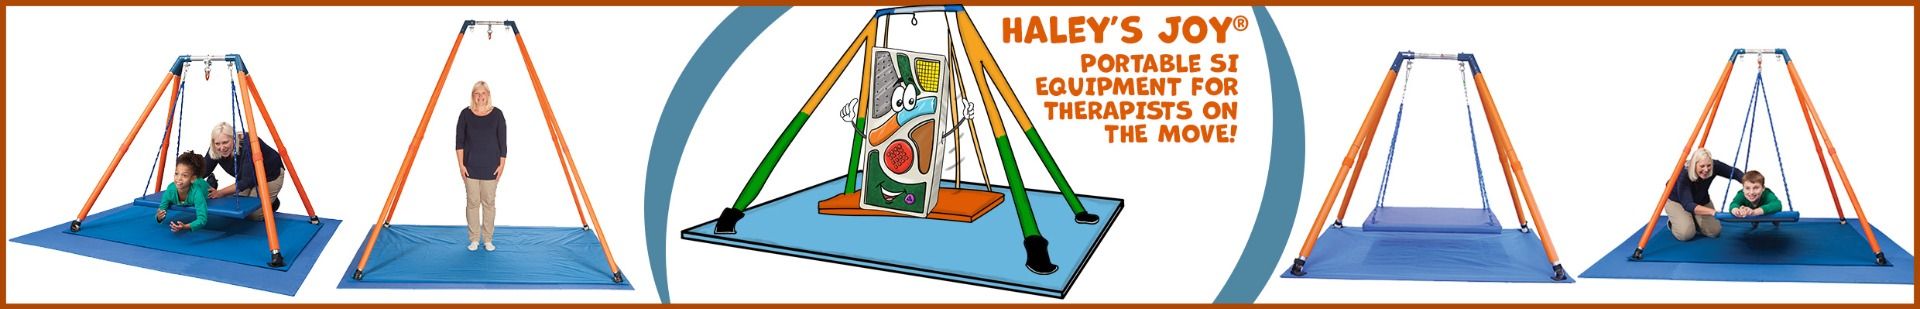 Haley's Joy Sensory Integration Equipment